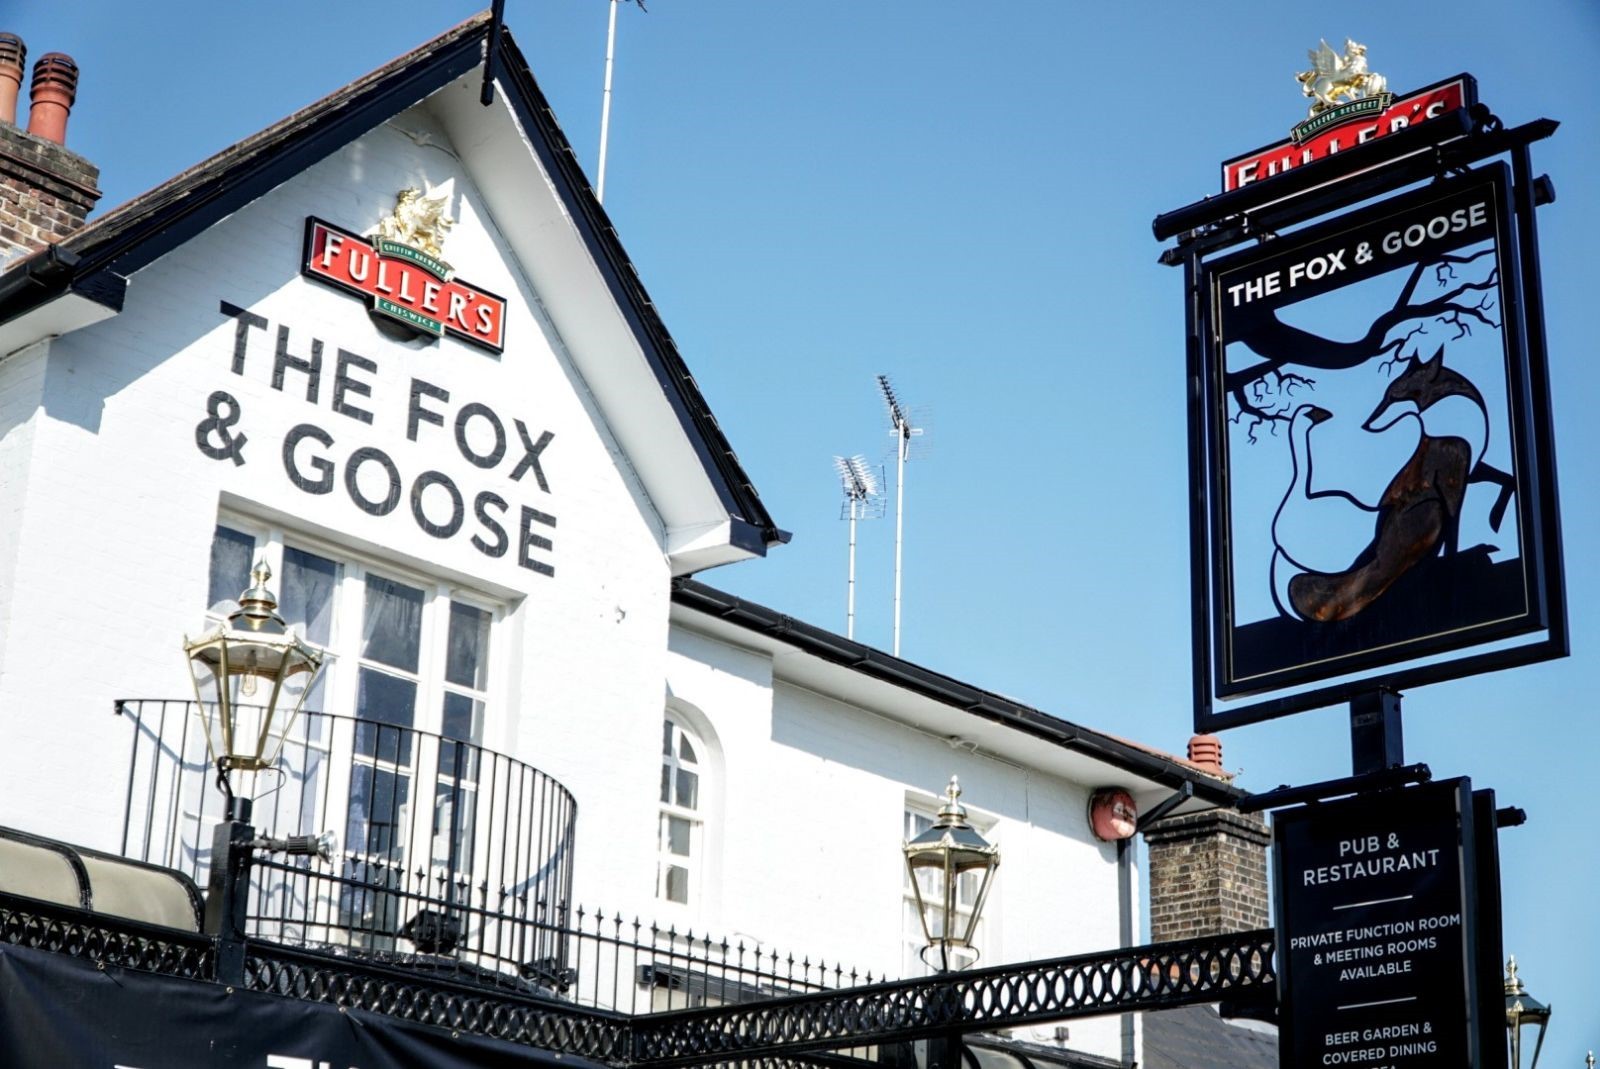 The Fox & Goose Hotel